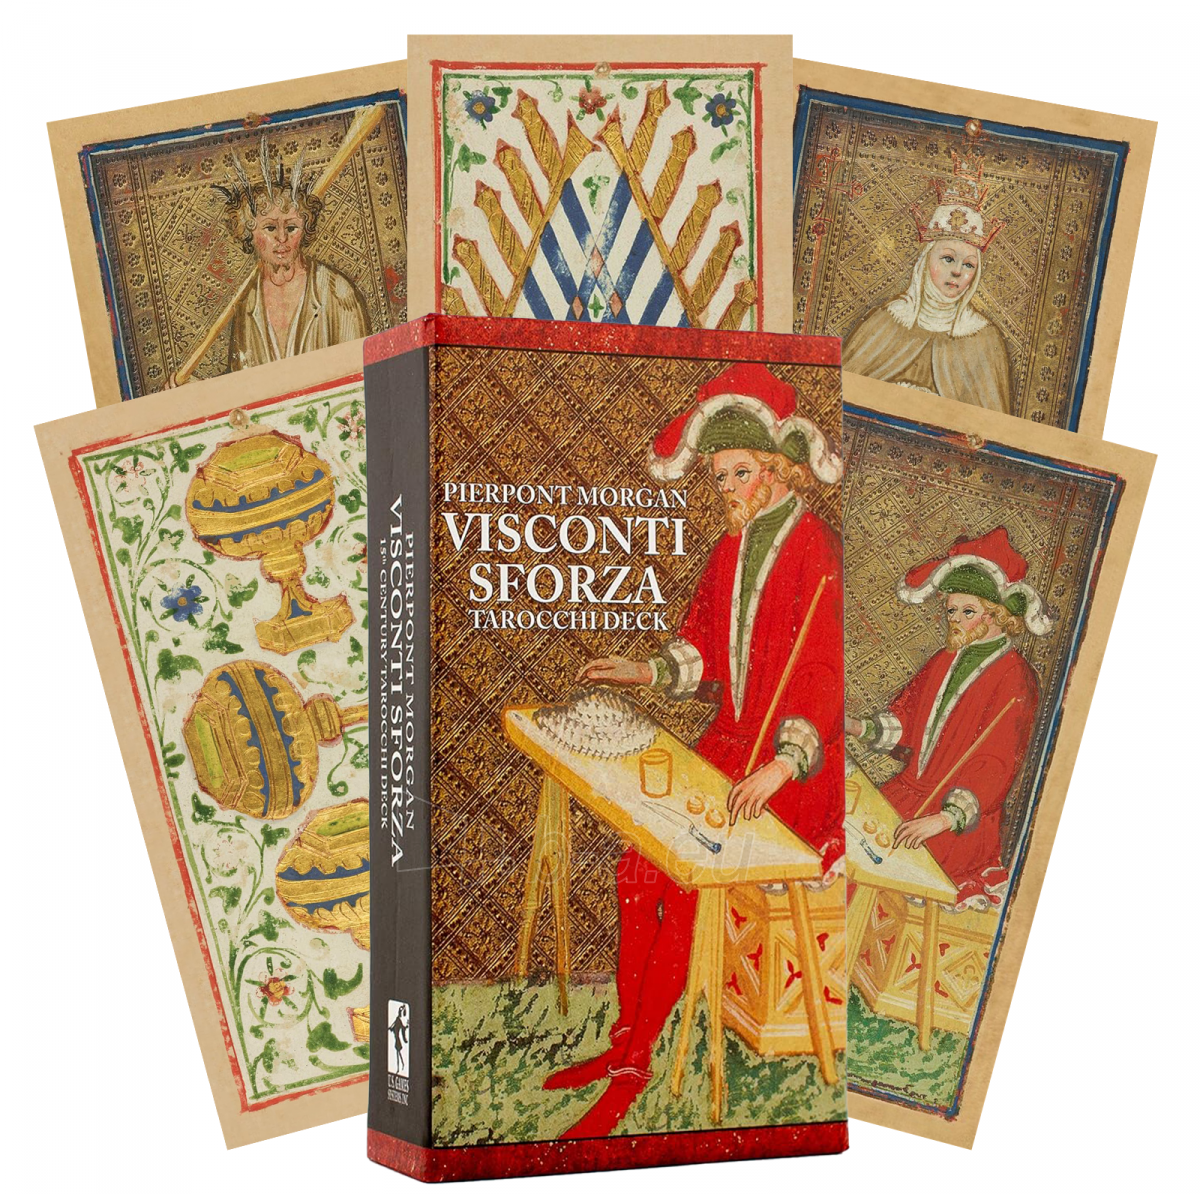 Visconti-Sforza Pierpont Morgan Tarocchi kortos paveikslėlis 2 iš 12